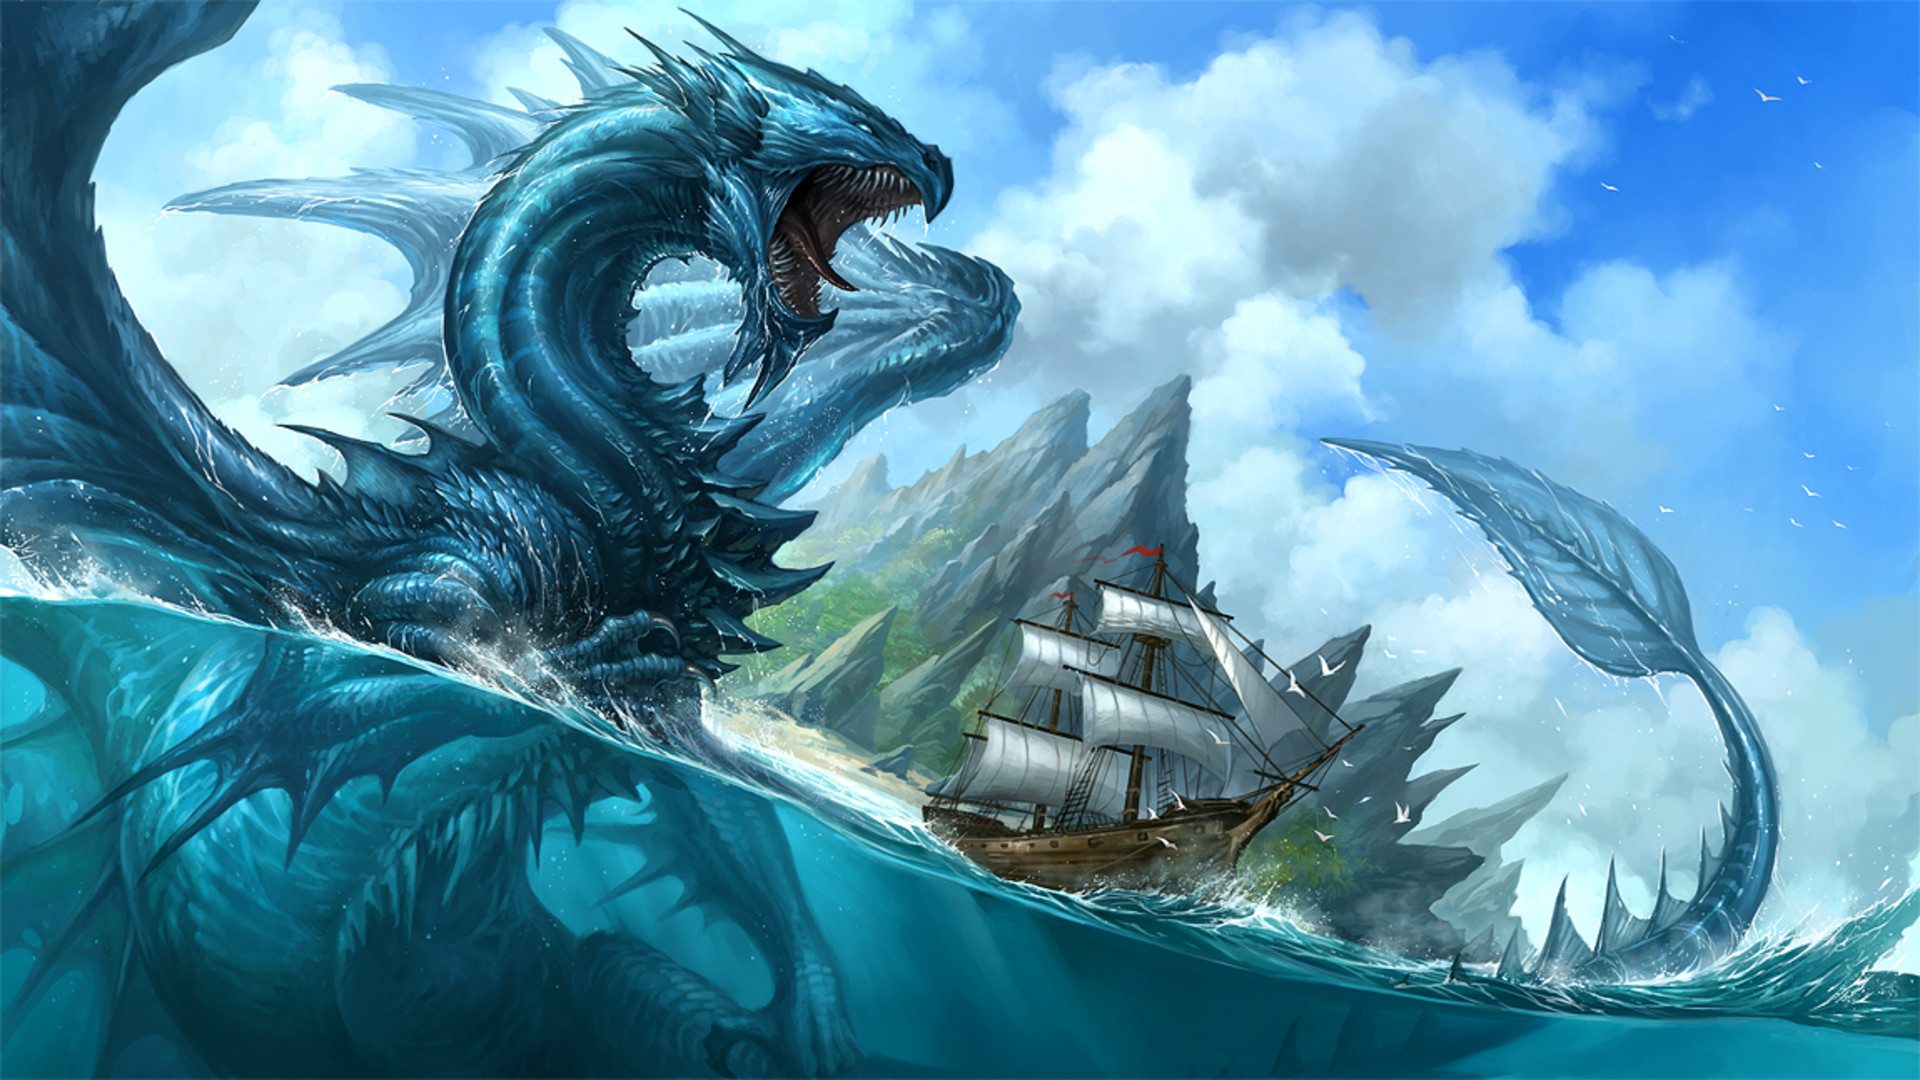 Water Dragon Wallpaper Image